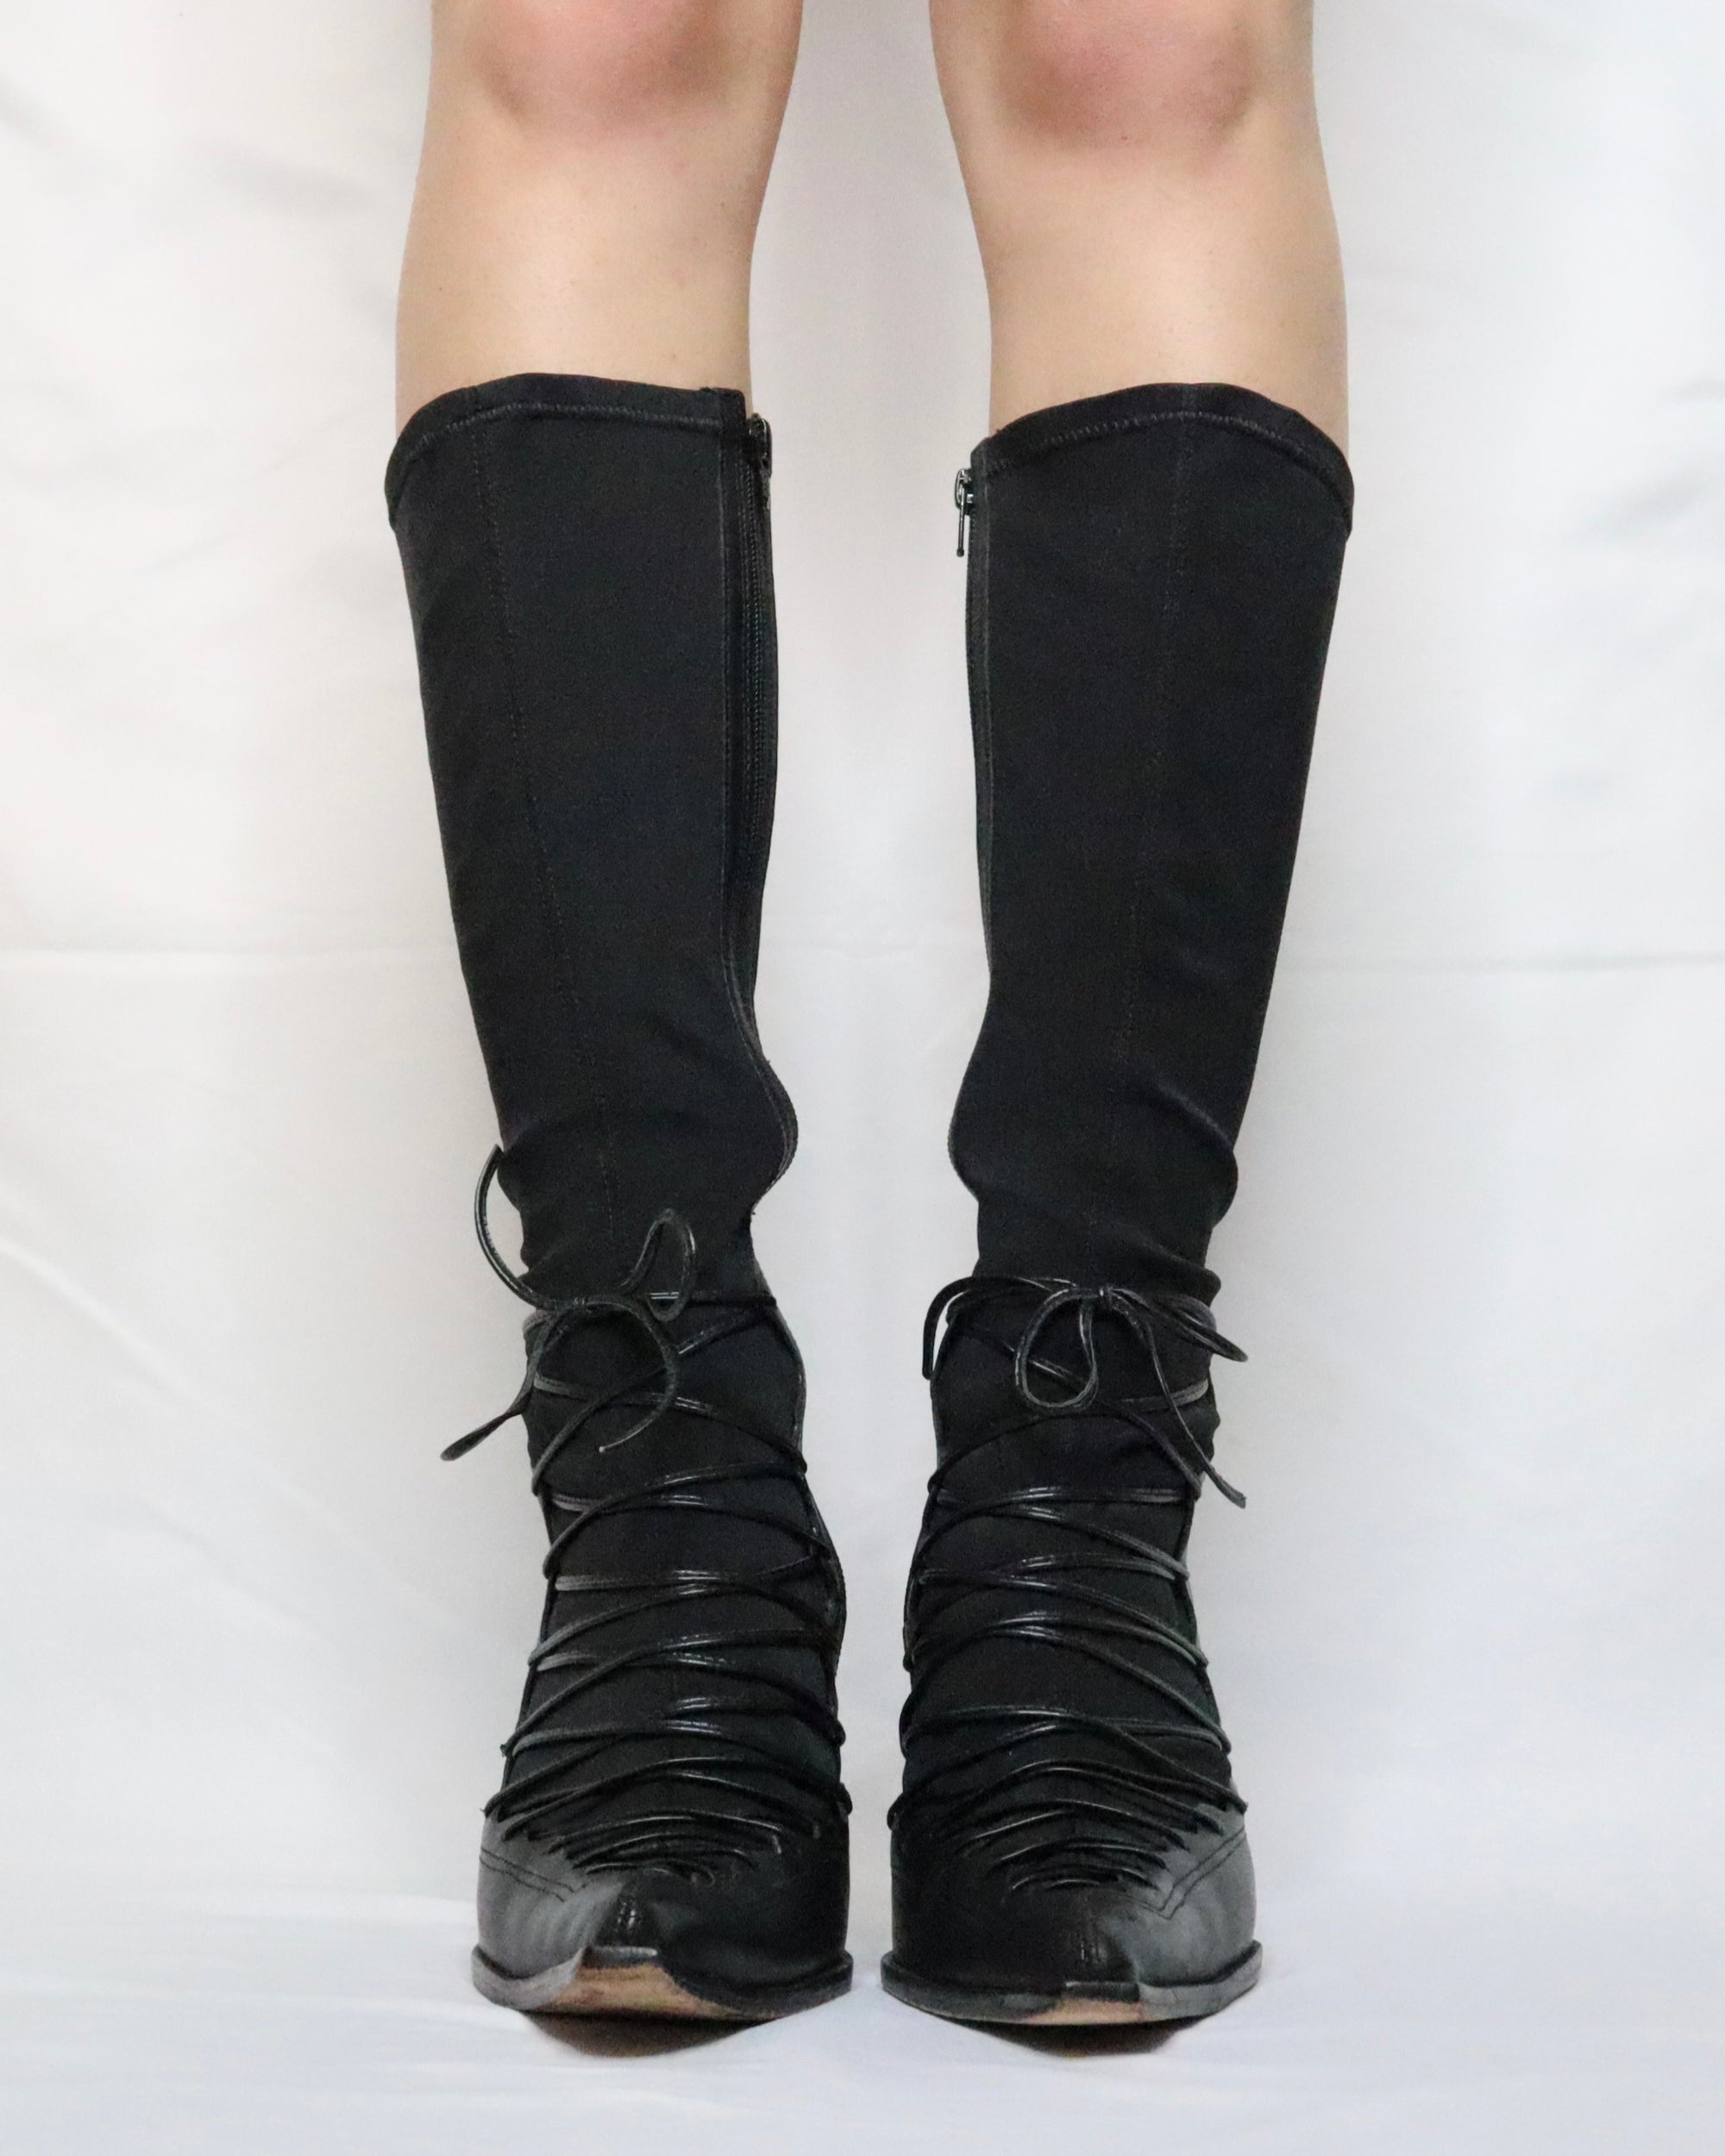 Black Stiletto Boots (7.5-8 US/39 EU) 